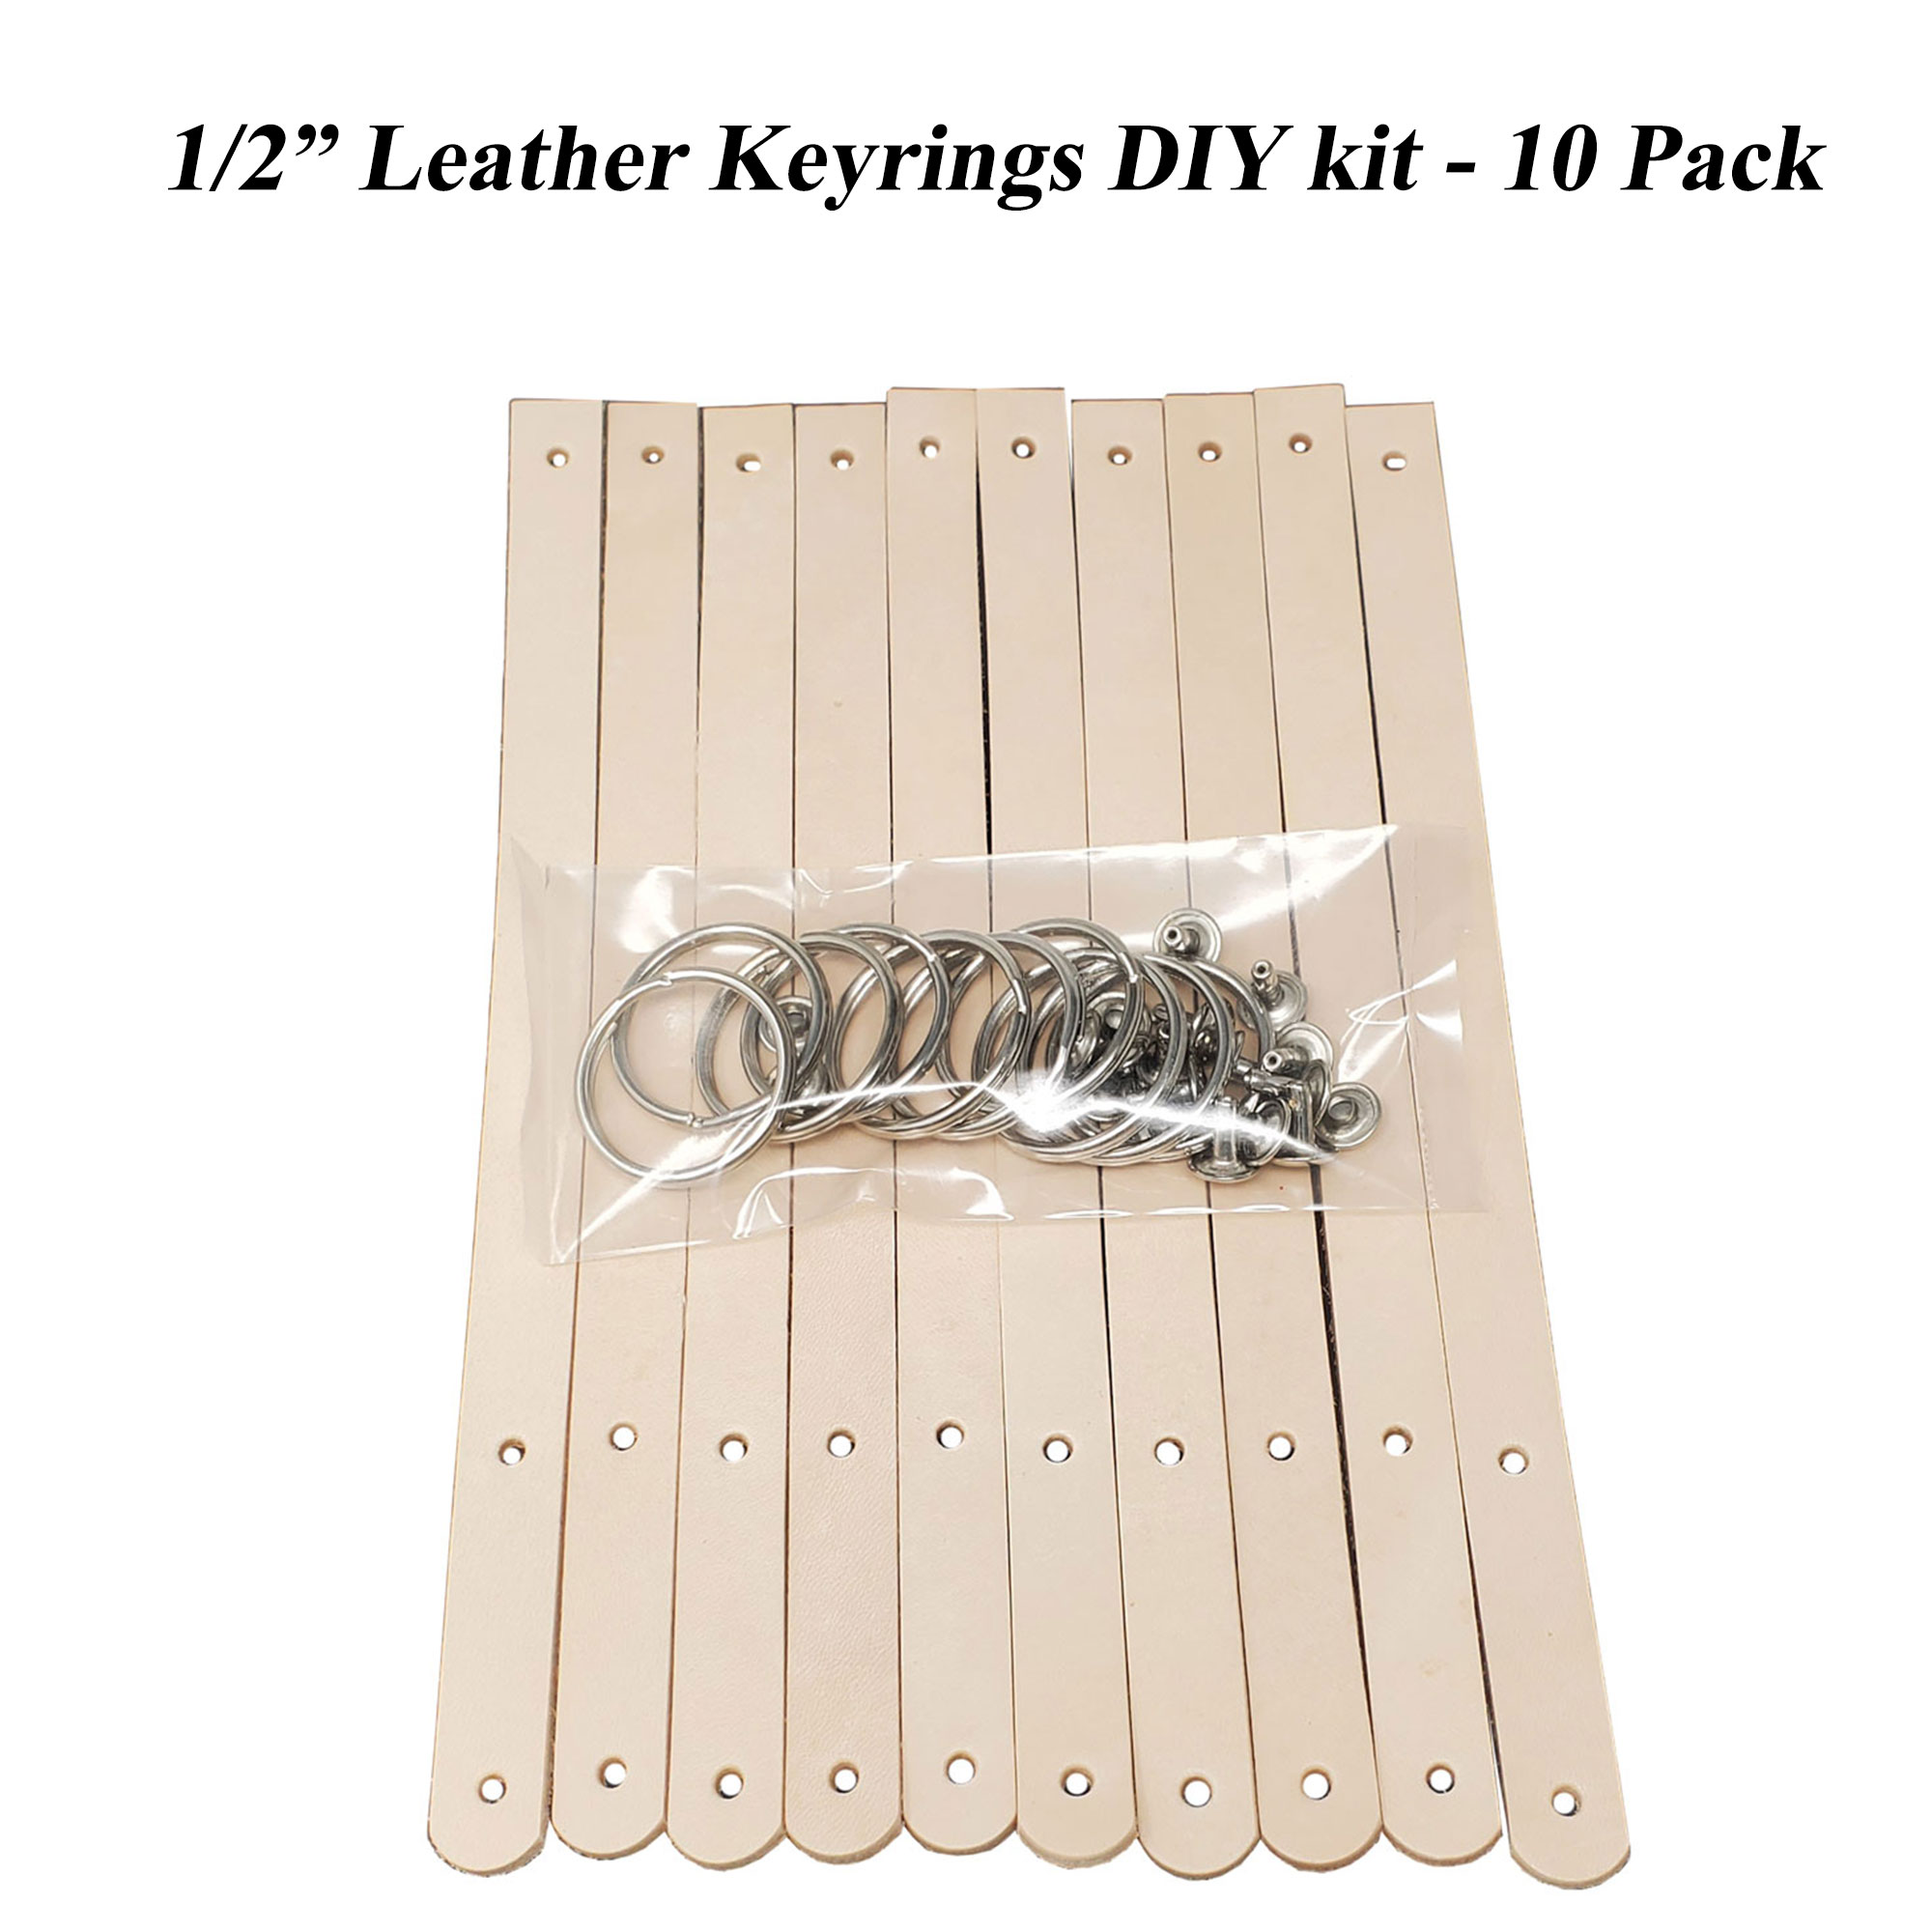 3/4″ Tooling Leather Bracelets – 8 pack – Pitka Leather